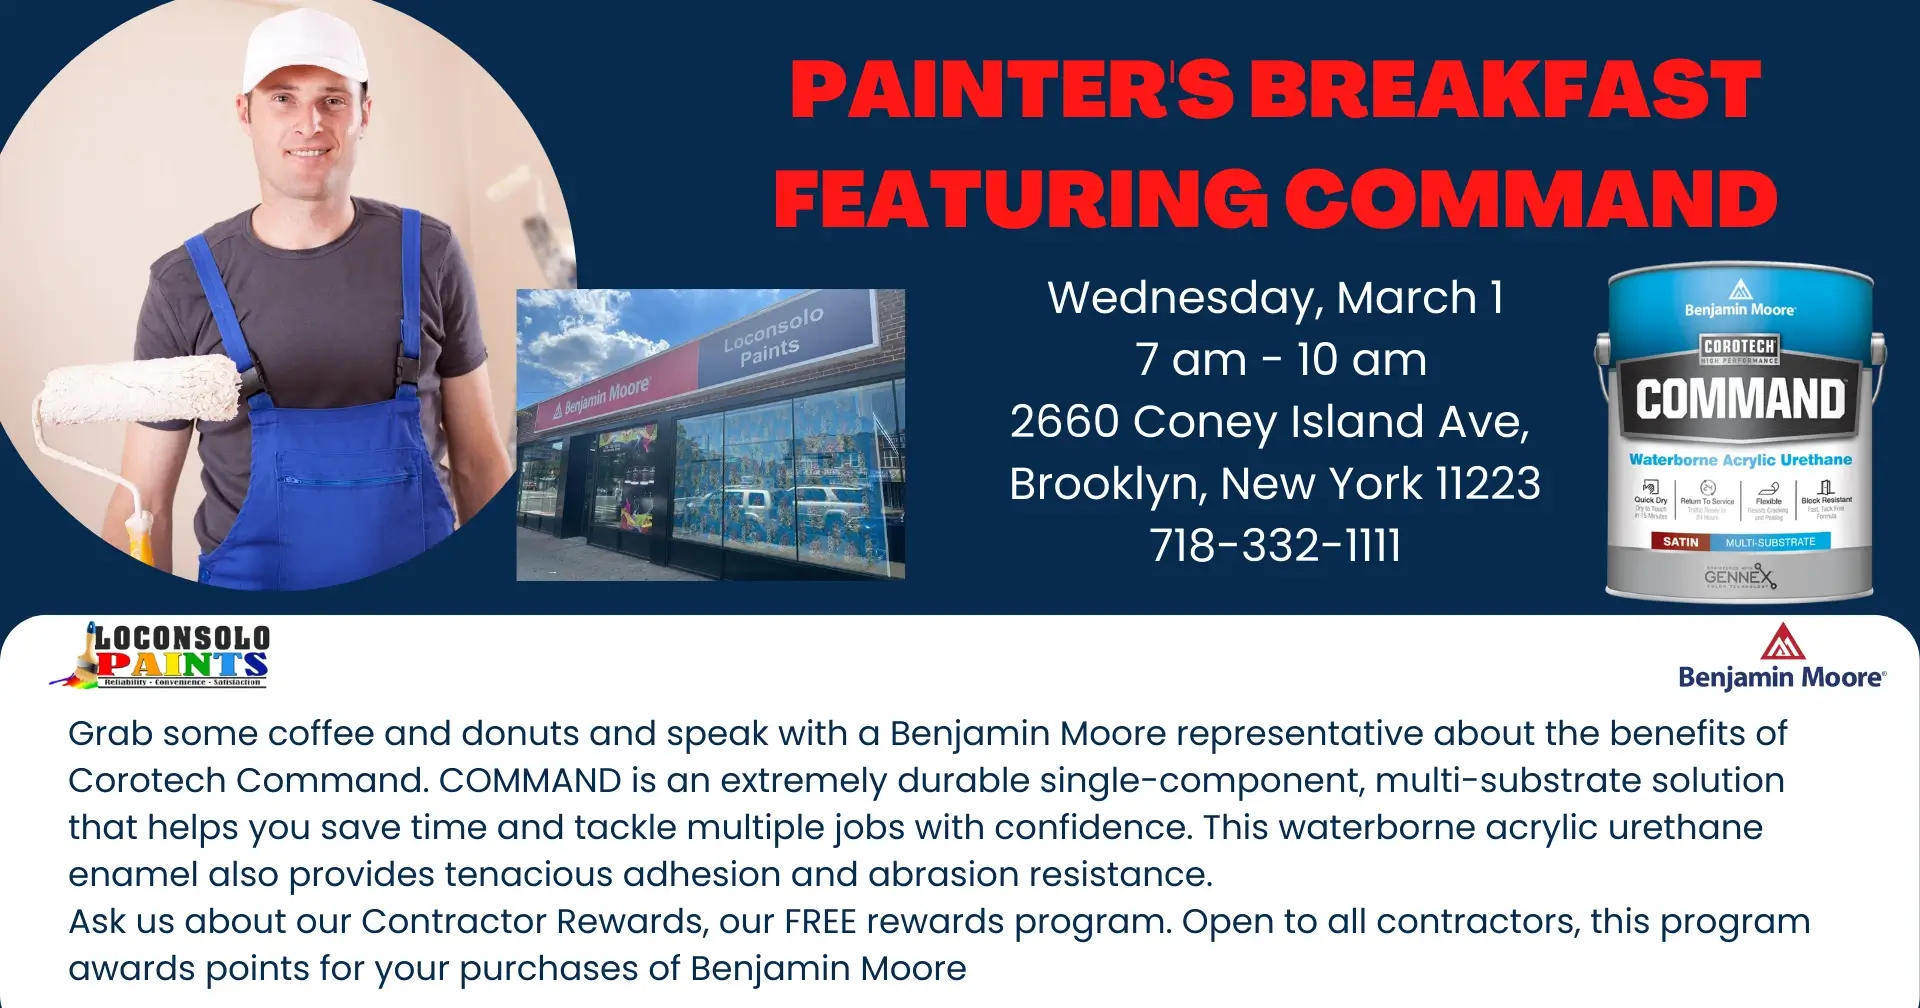 loconsolo paints painter's breakfast Coney Island ave Brooklyn